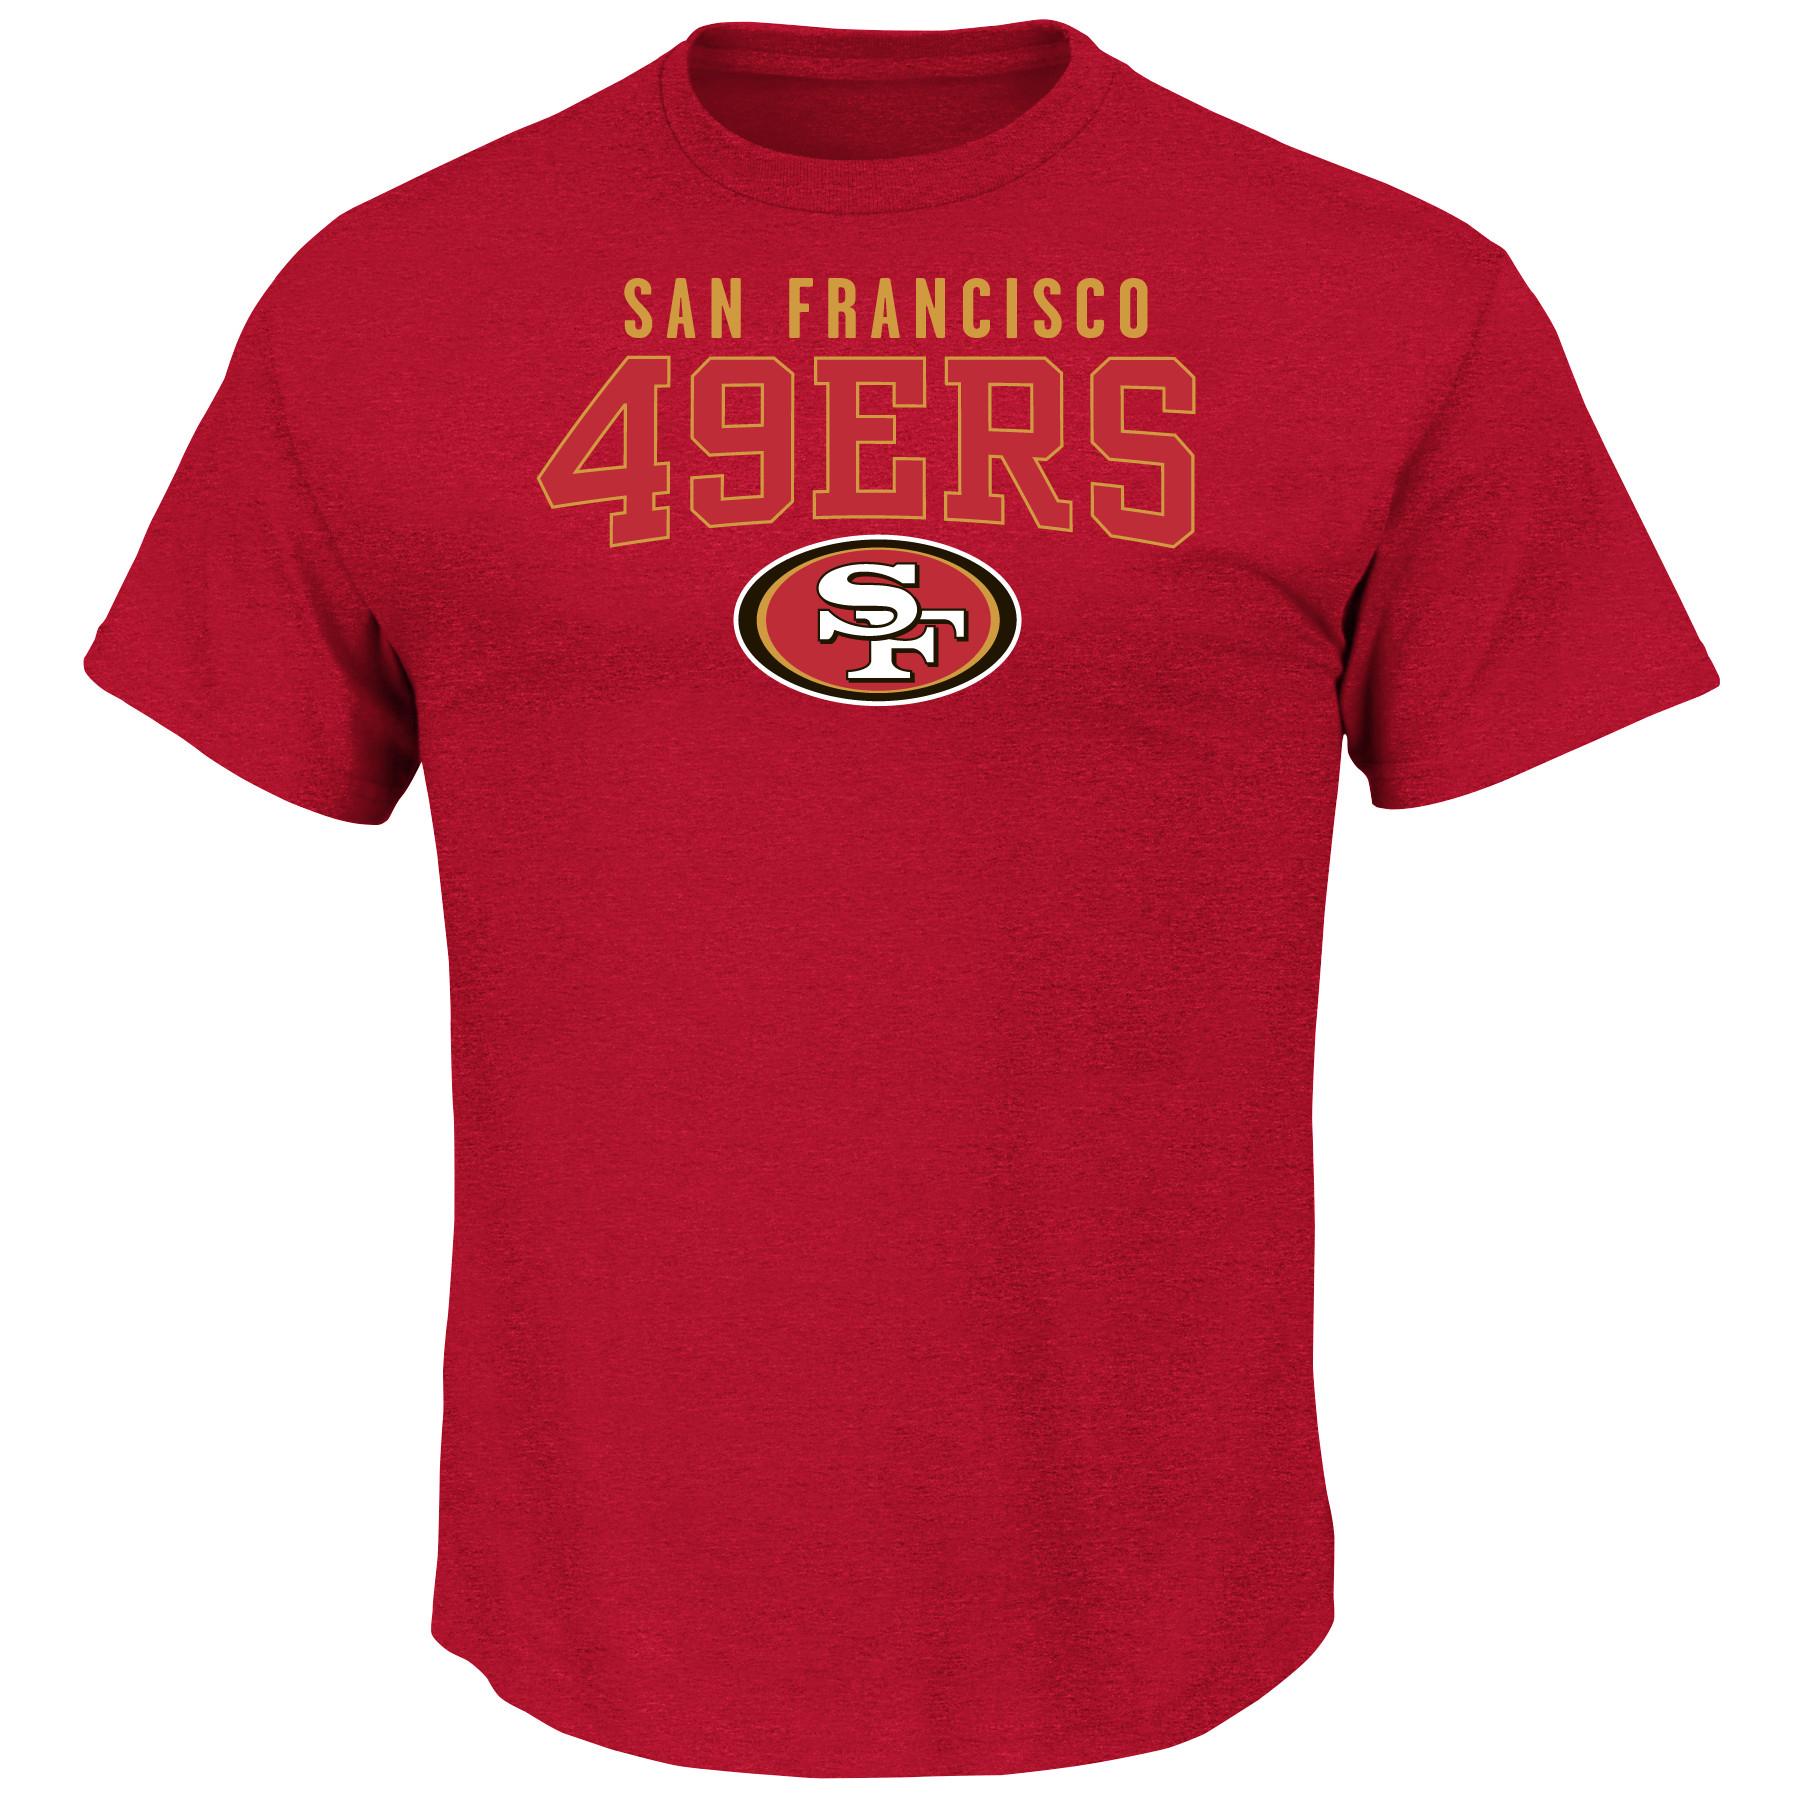 NFL Men's Big & Tall Graphic T-Shirt - San Francisco 49ers